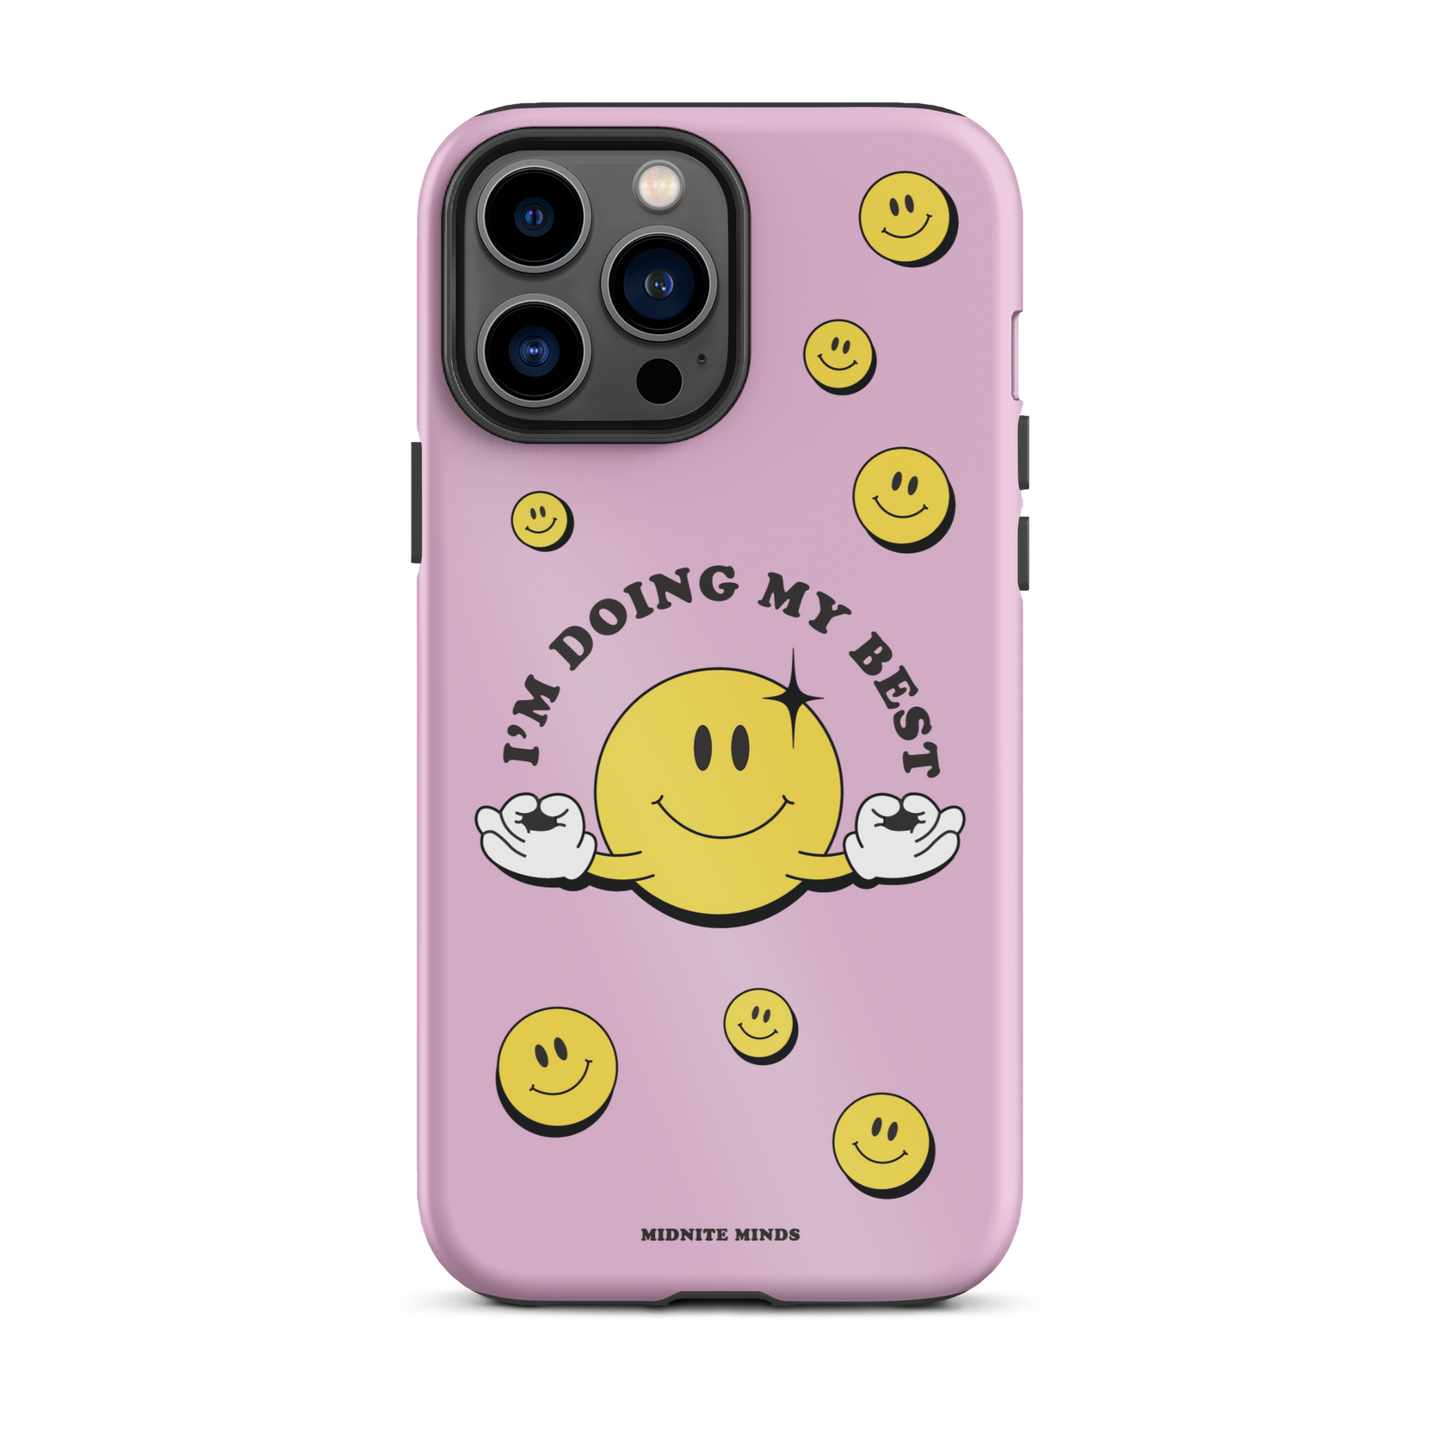 iphone case, pink iphone case, pink phone case, smiley face phone case